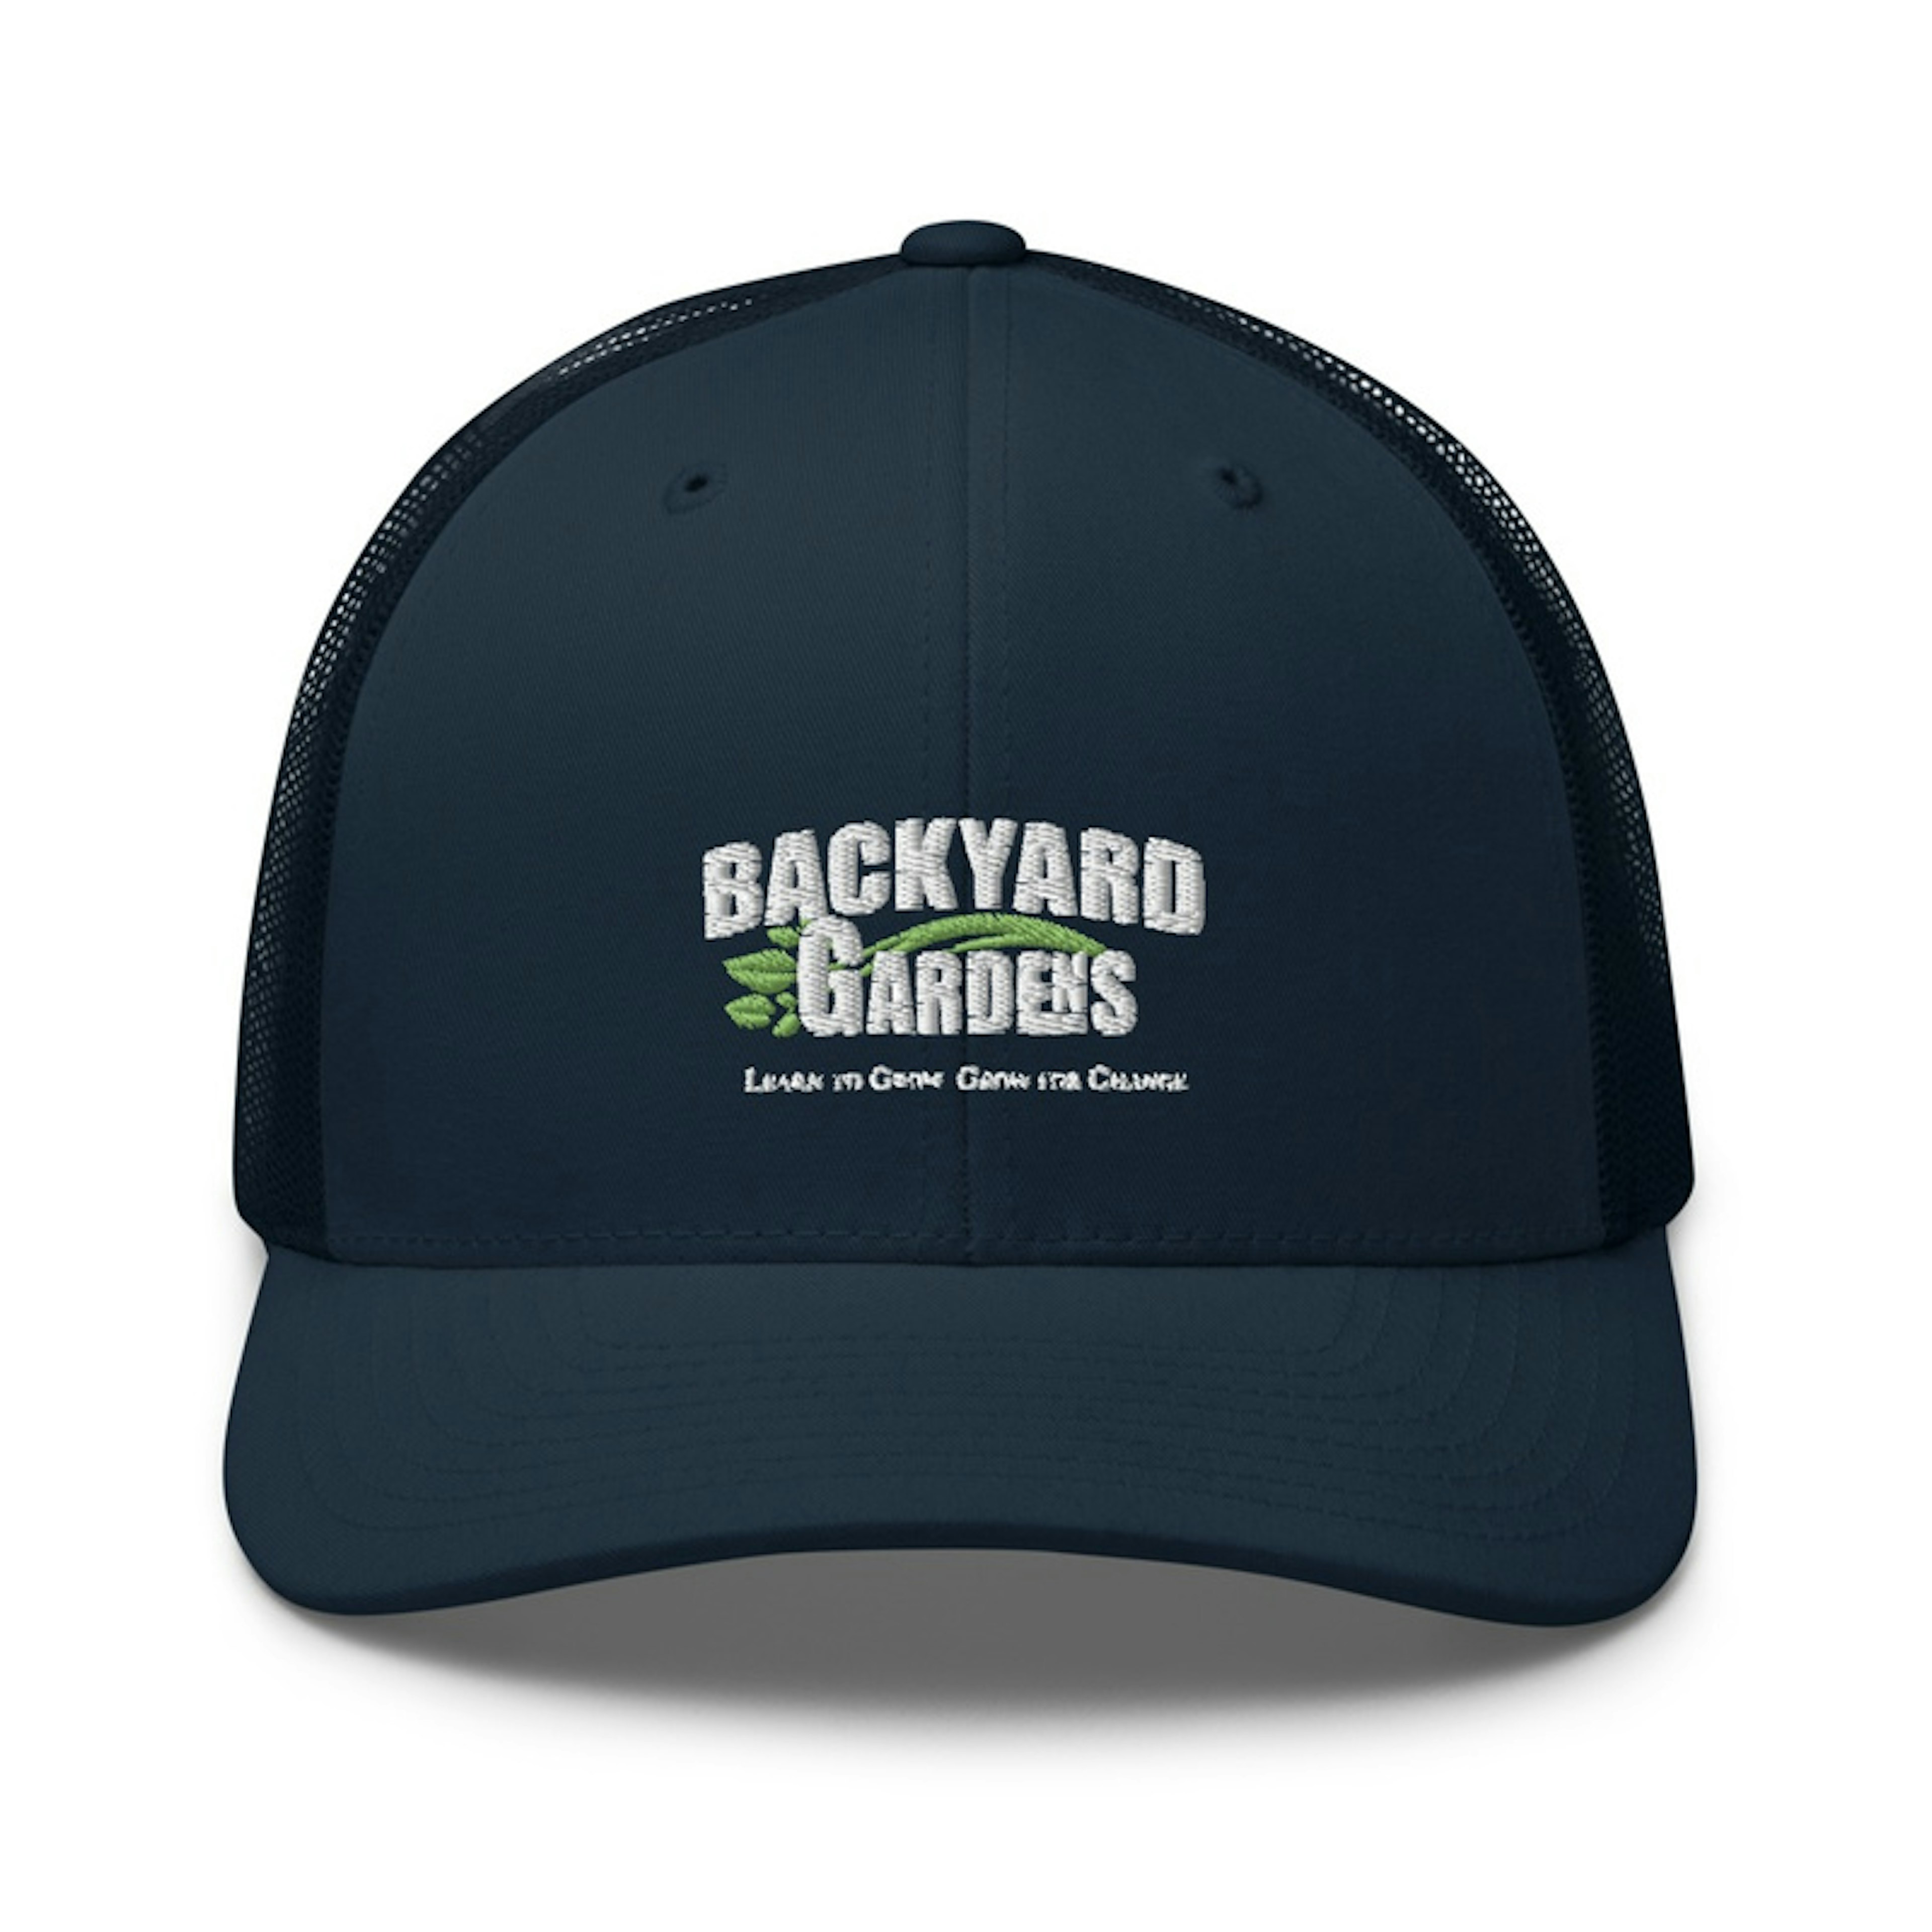 Backyard Gardens Trucker hat